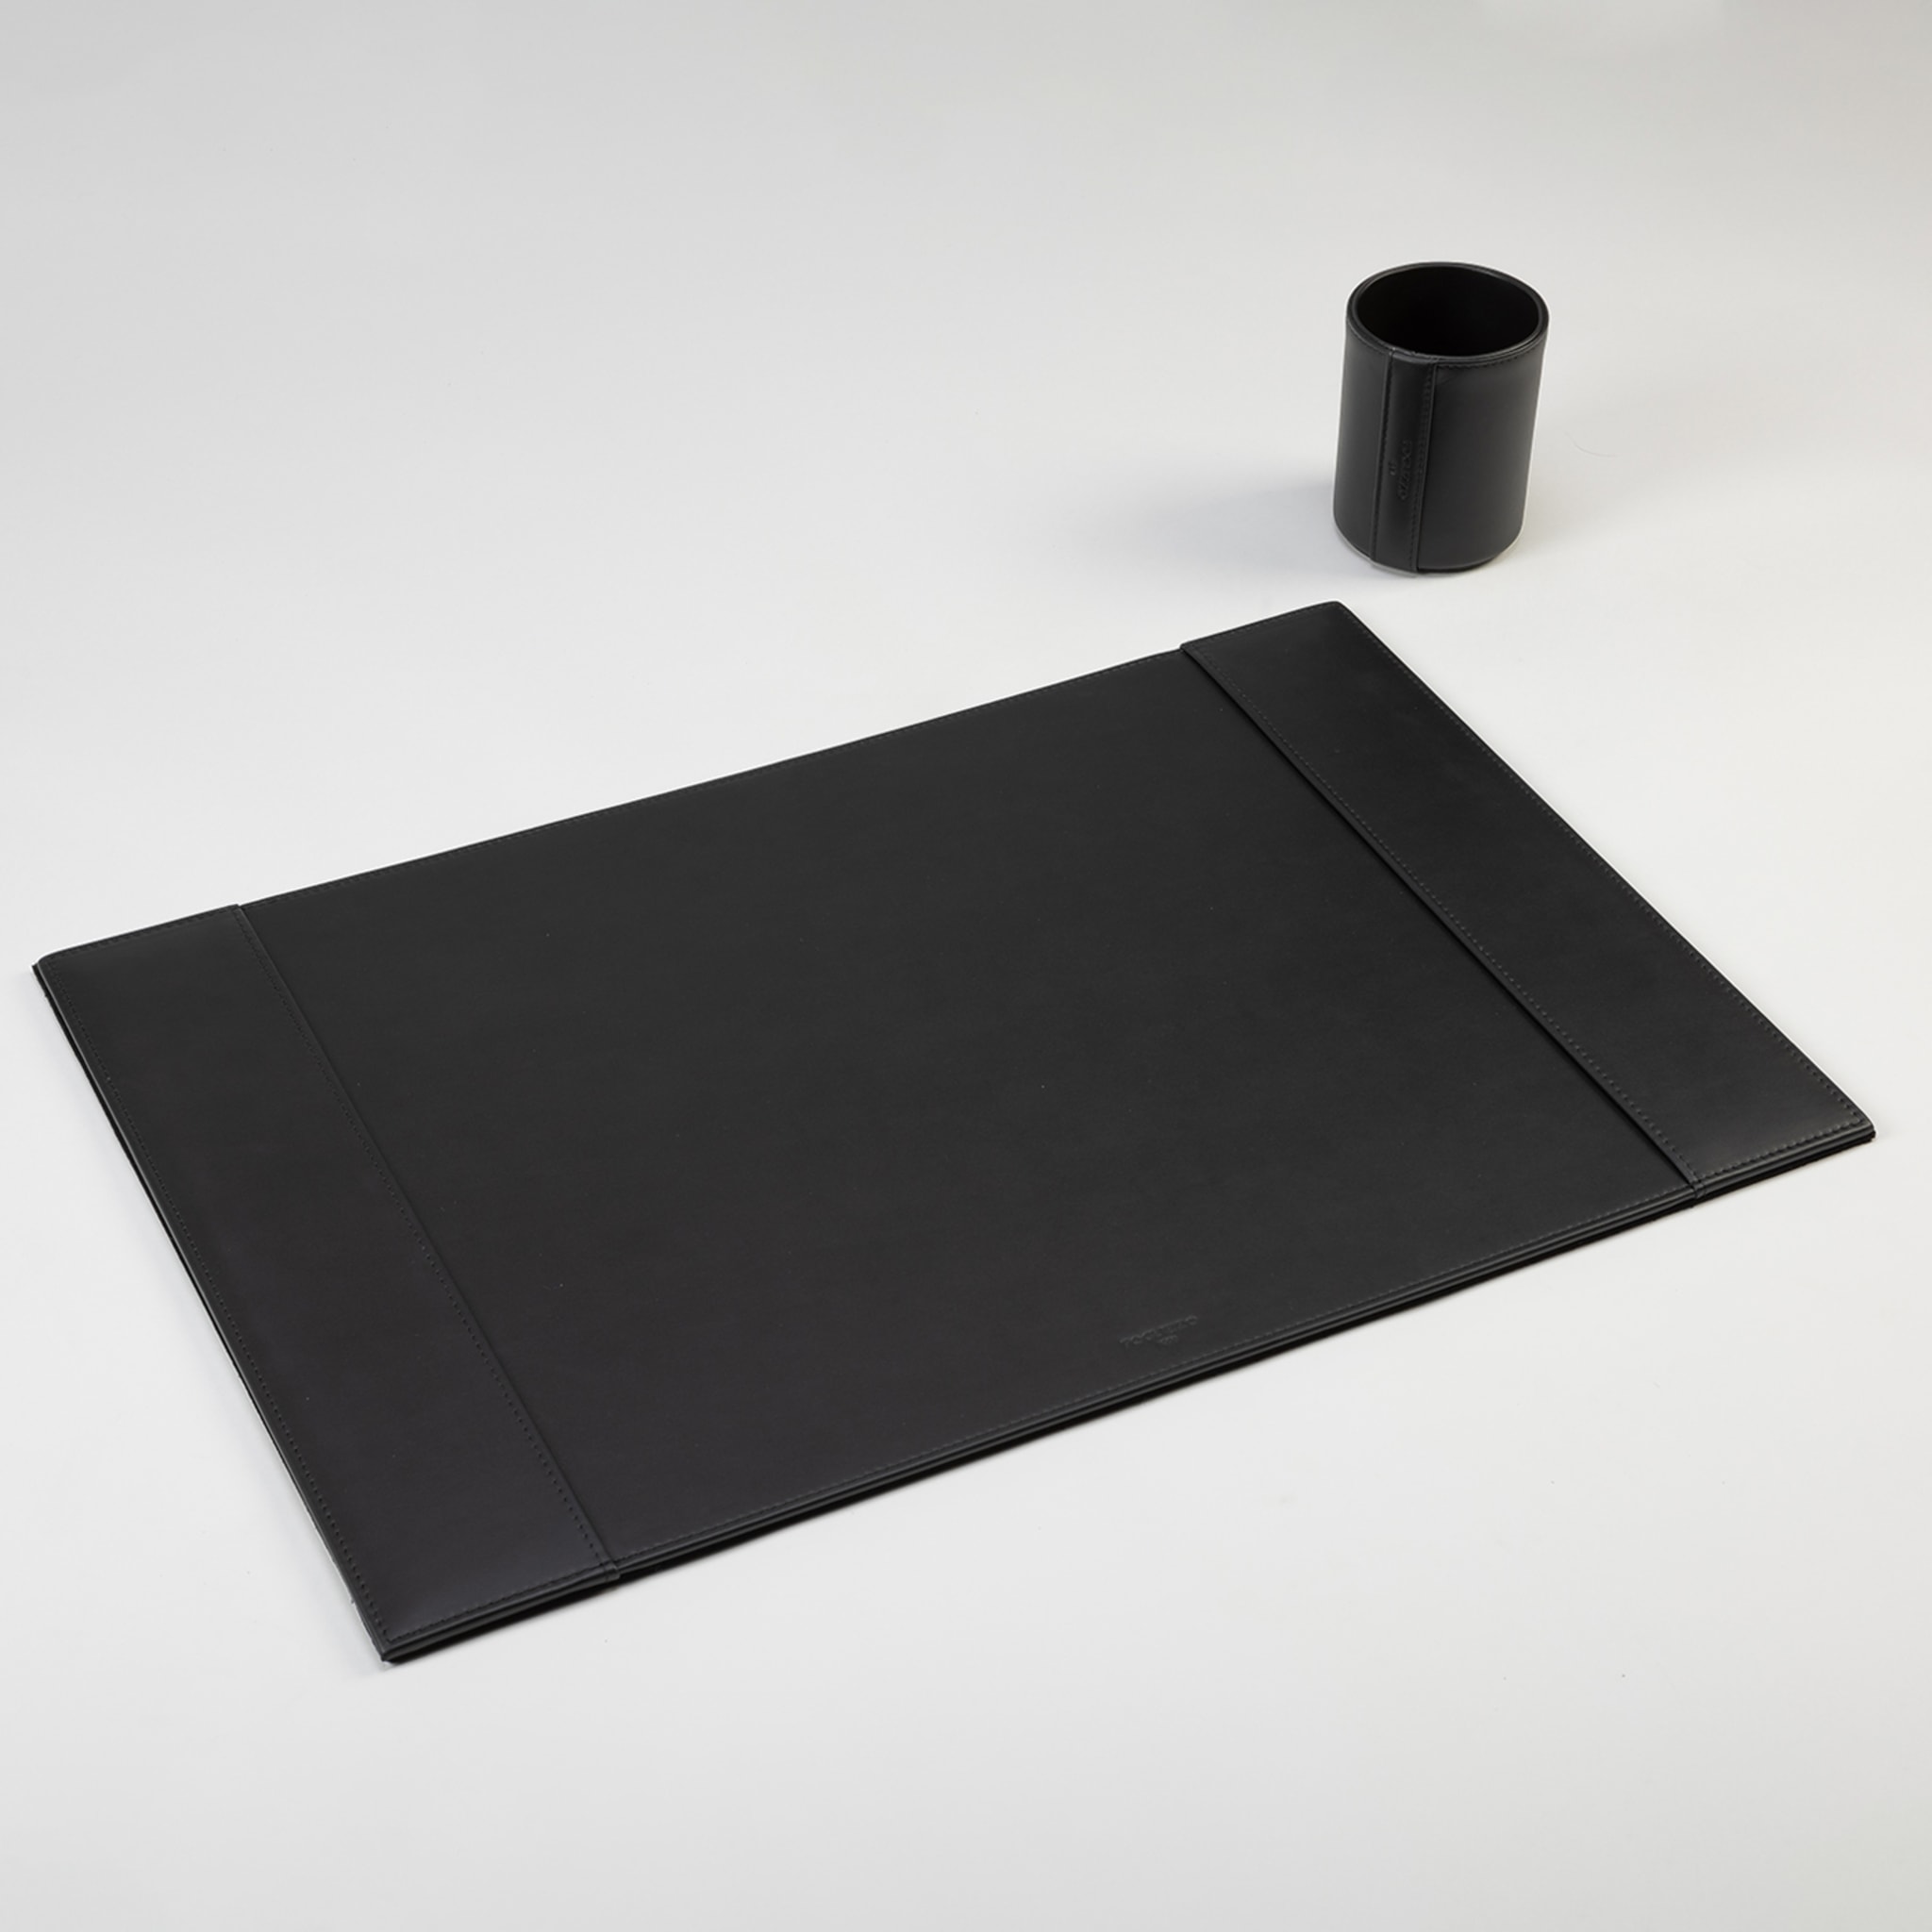 Picasso Notte Black Deskpad - Alternative view 3